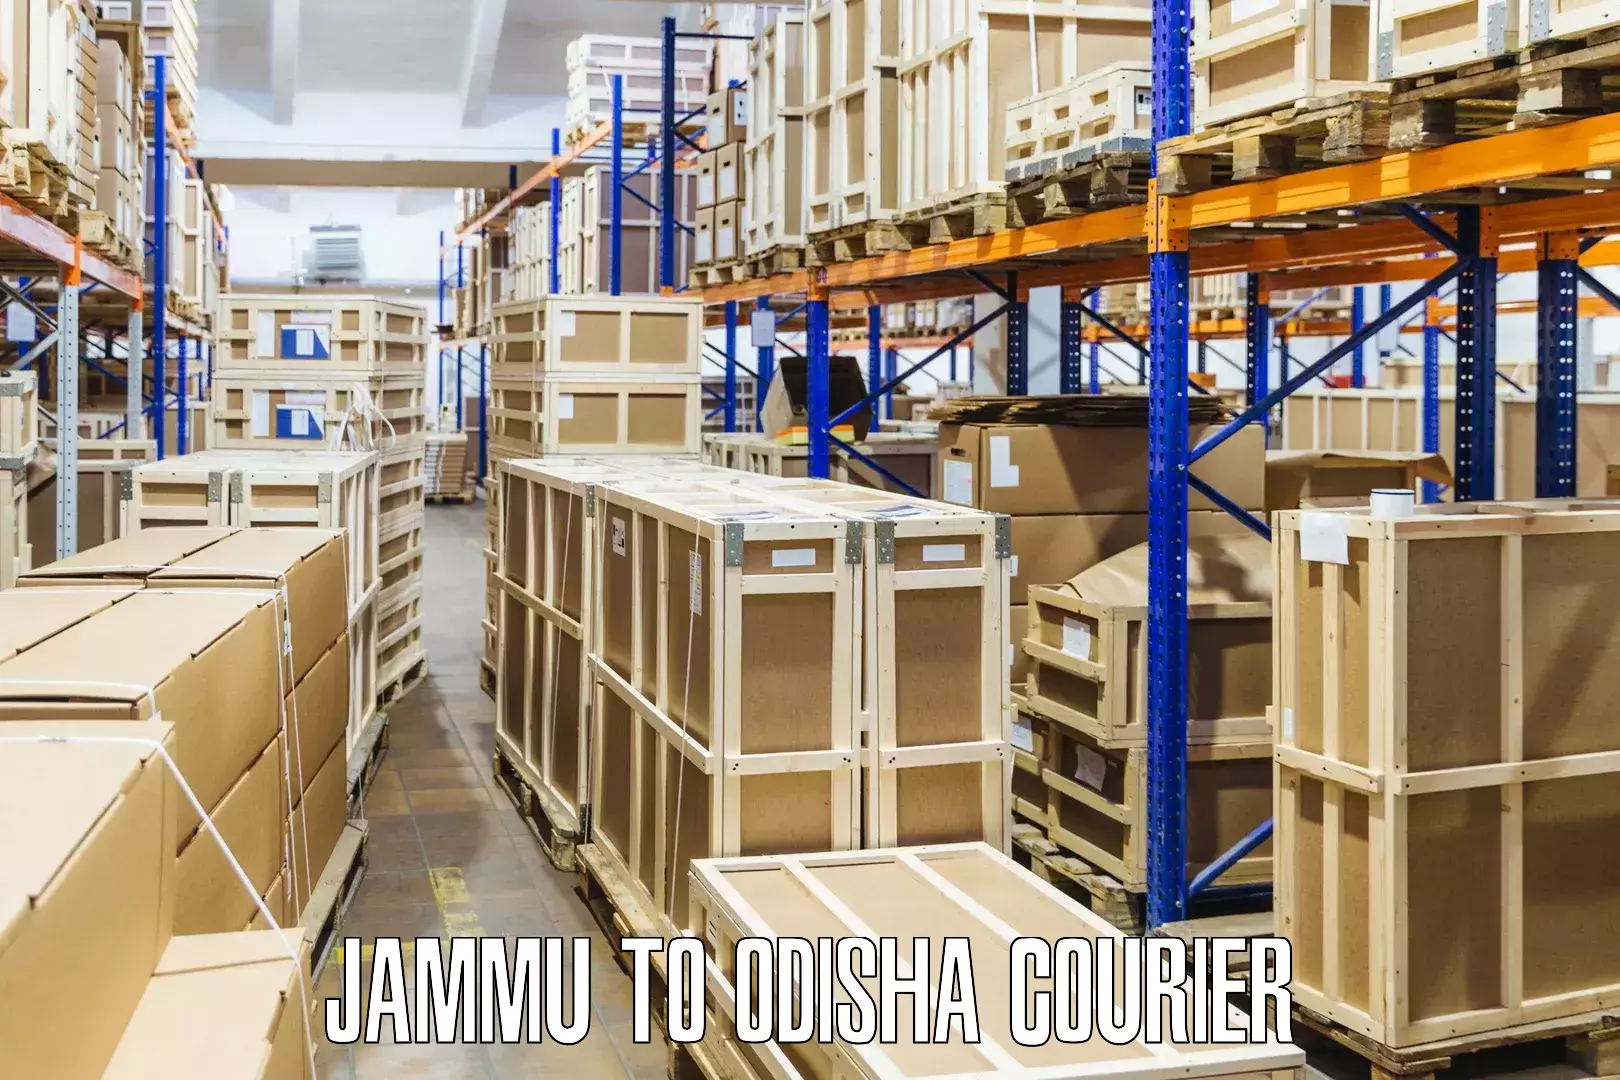 Courier service comparison Jammu to Malkangiri